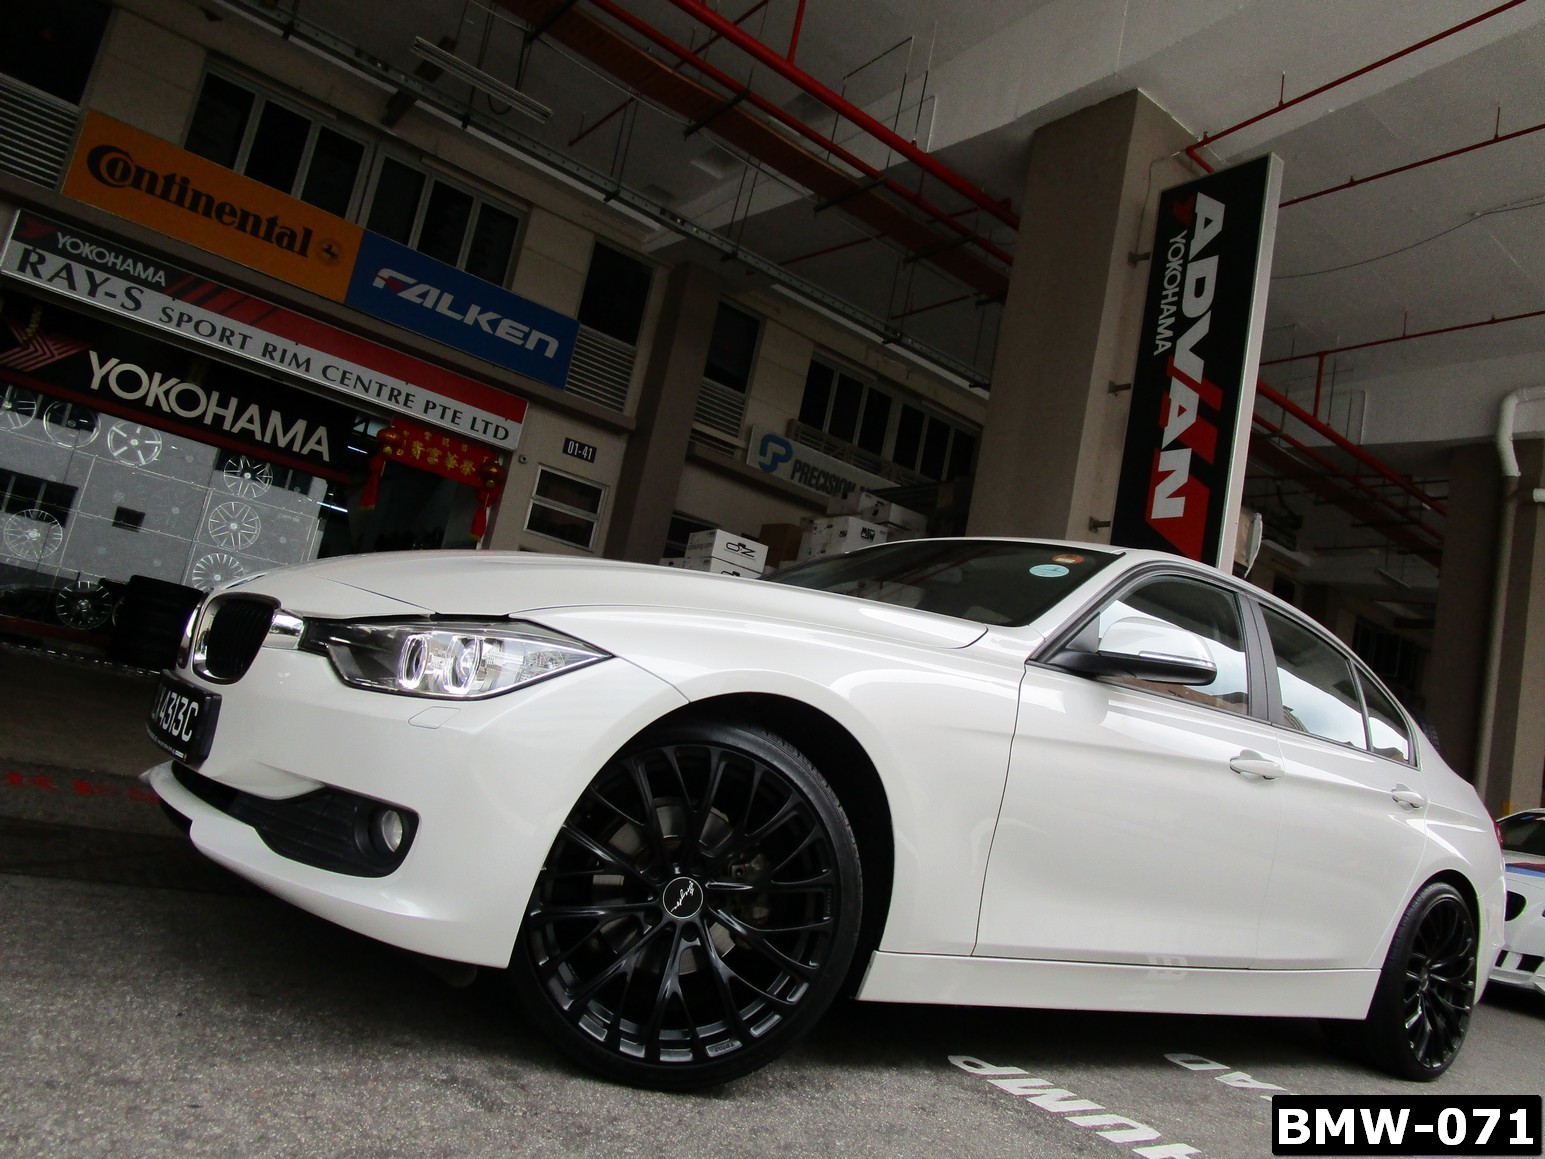 BMW-071.jpg